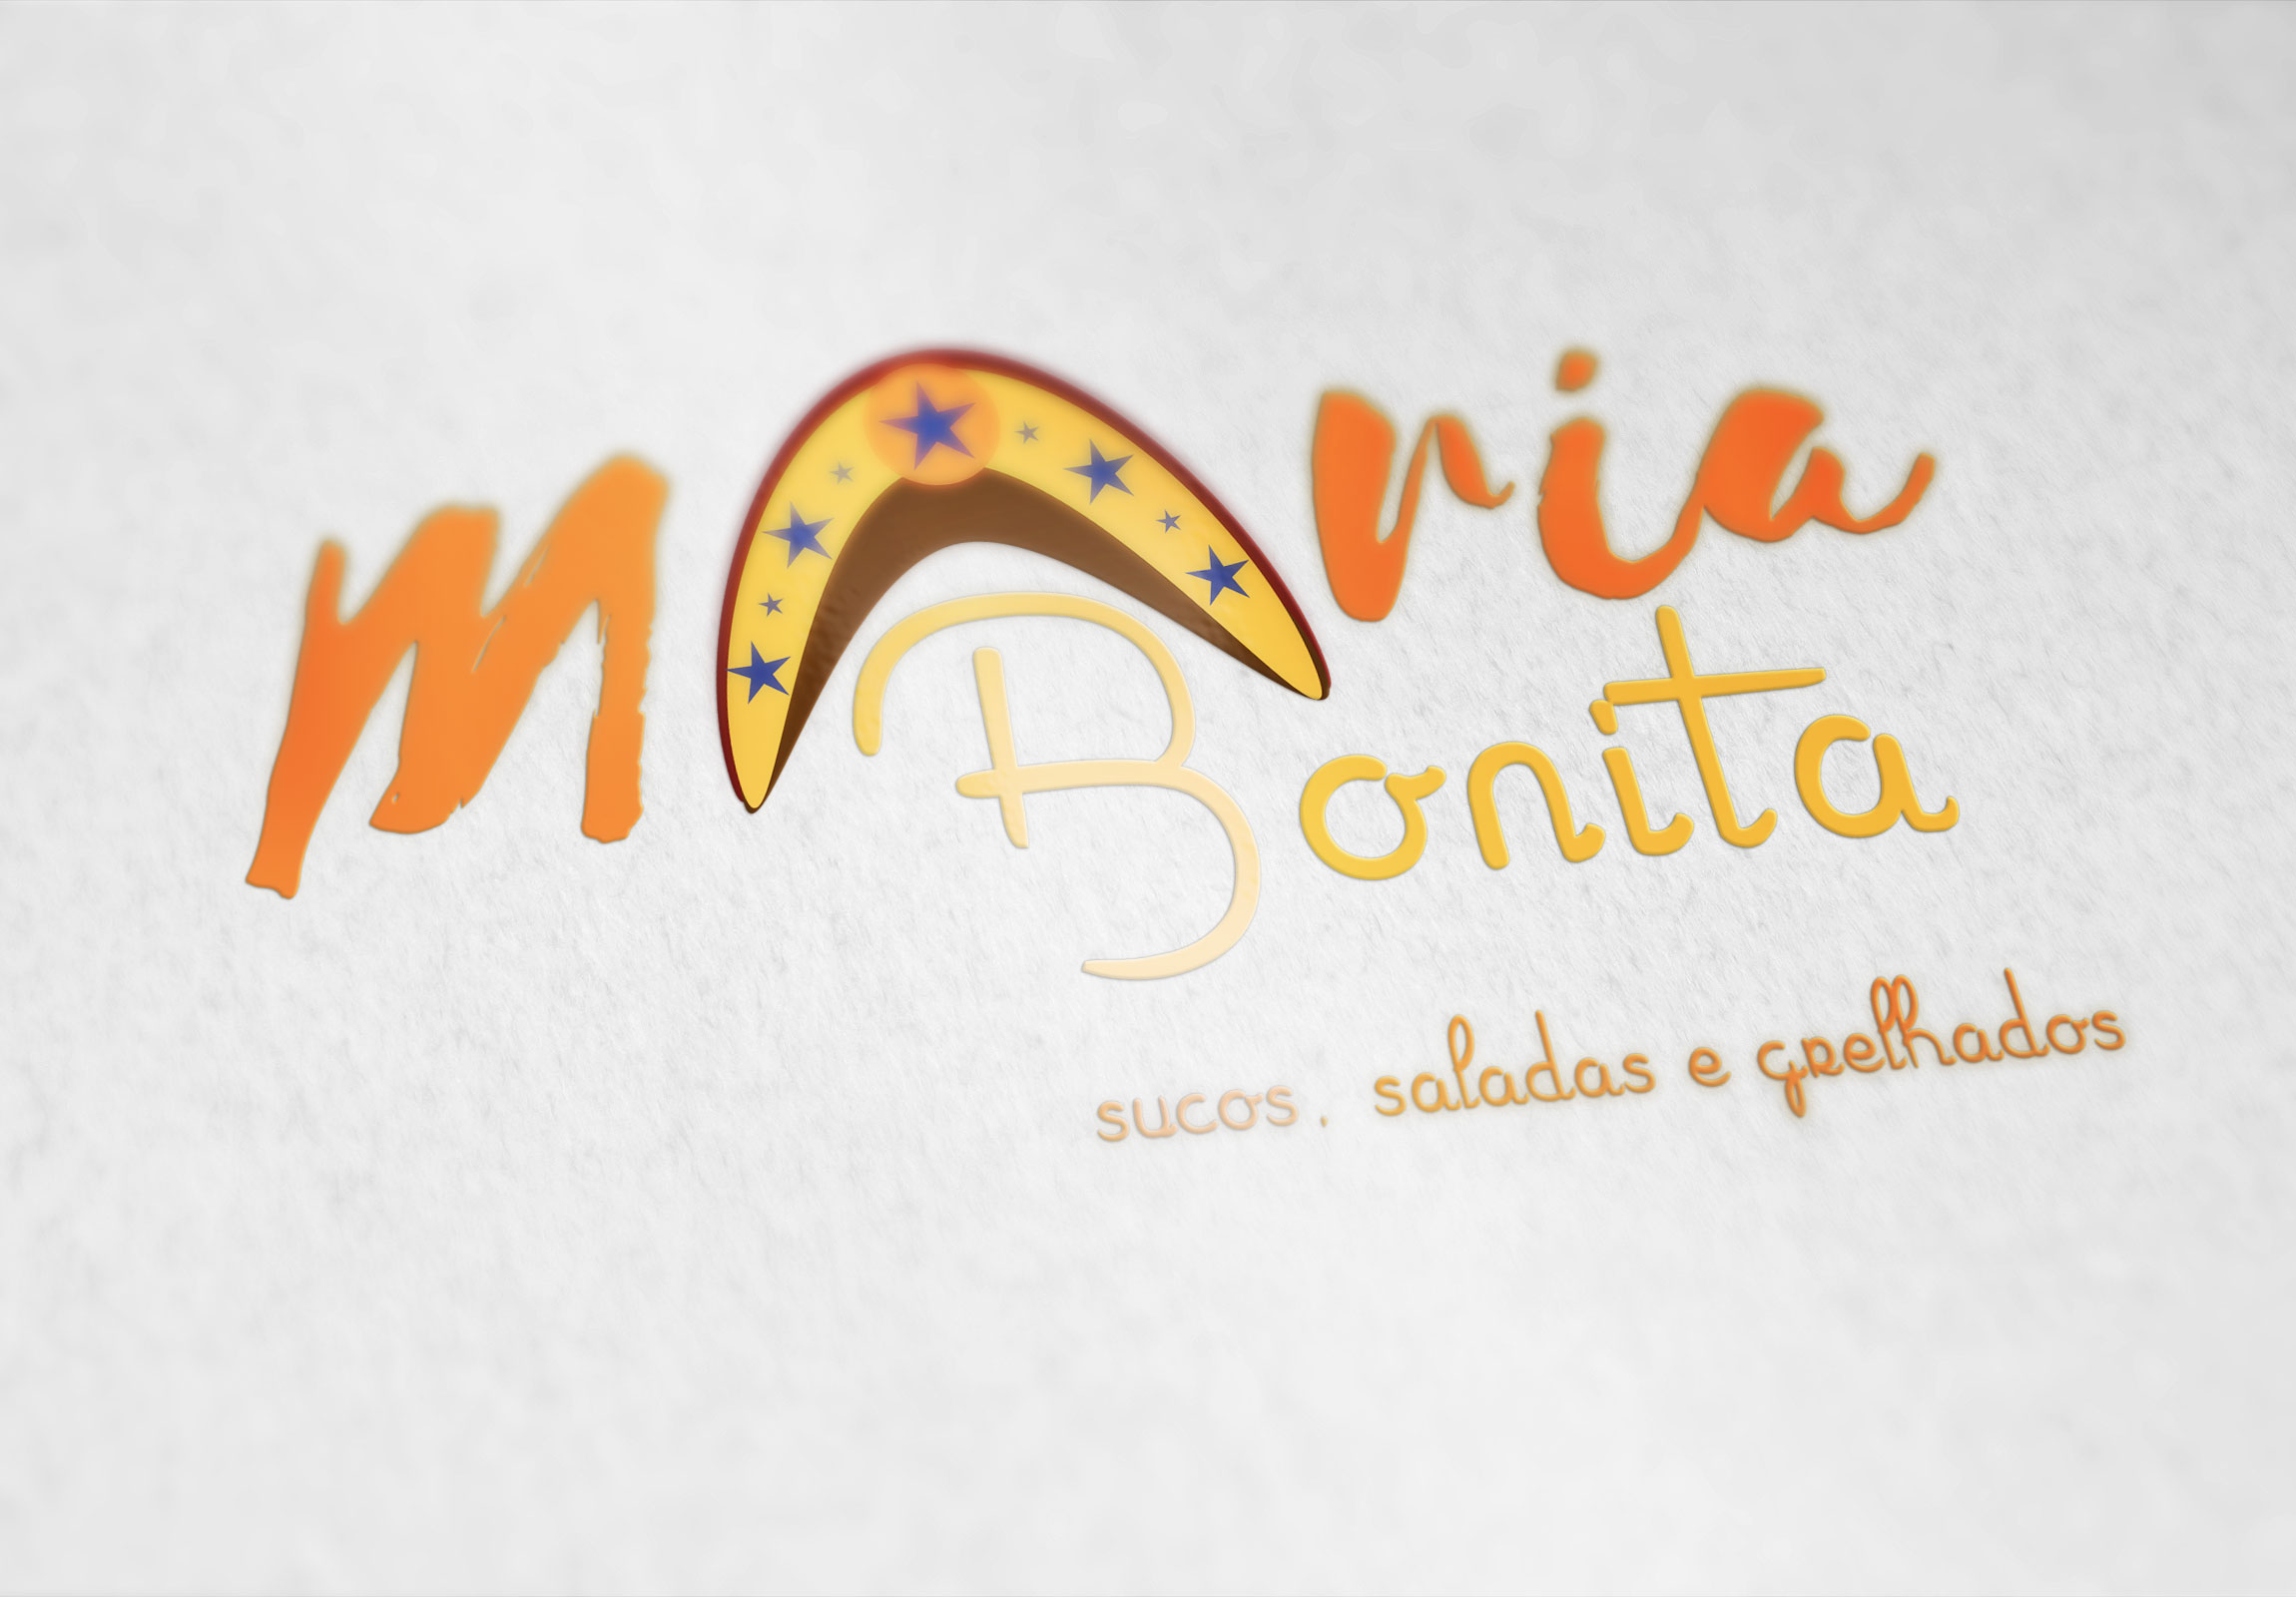 Restaurante Maria Bonita